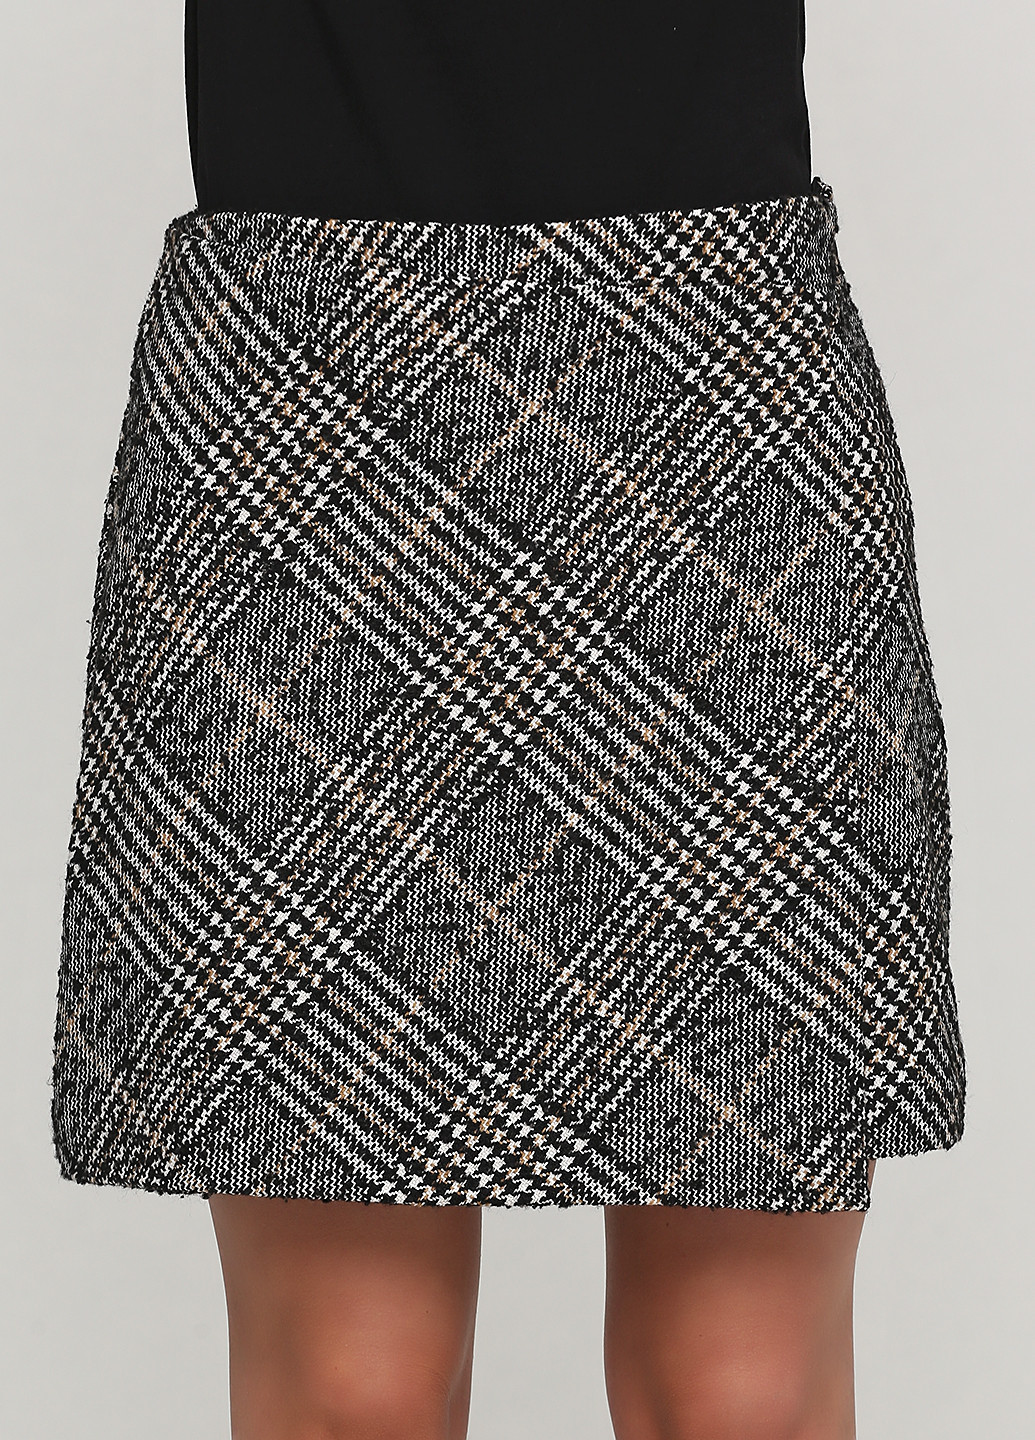 Черно-белая кэжуал с абстрактным узором юбка H&M а-силуэта (трапеция), на запах